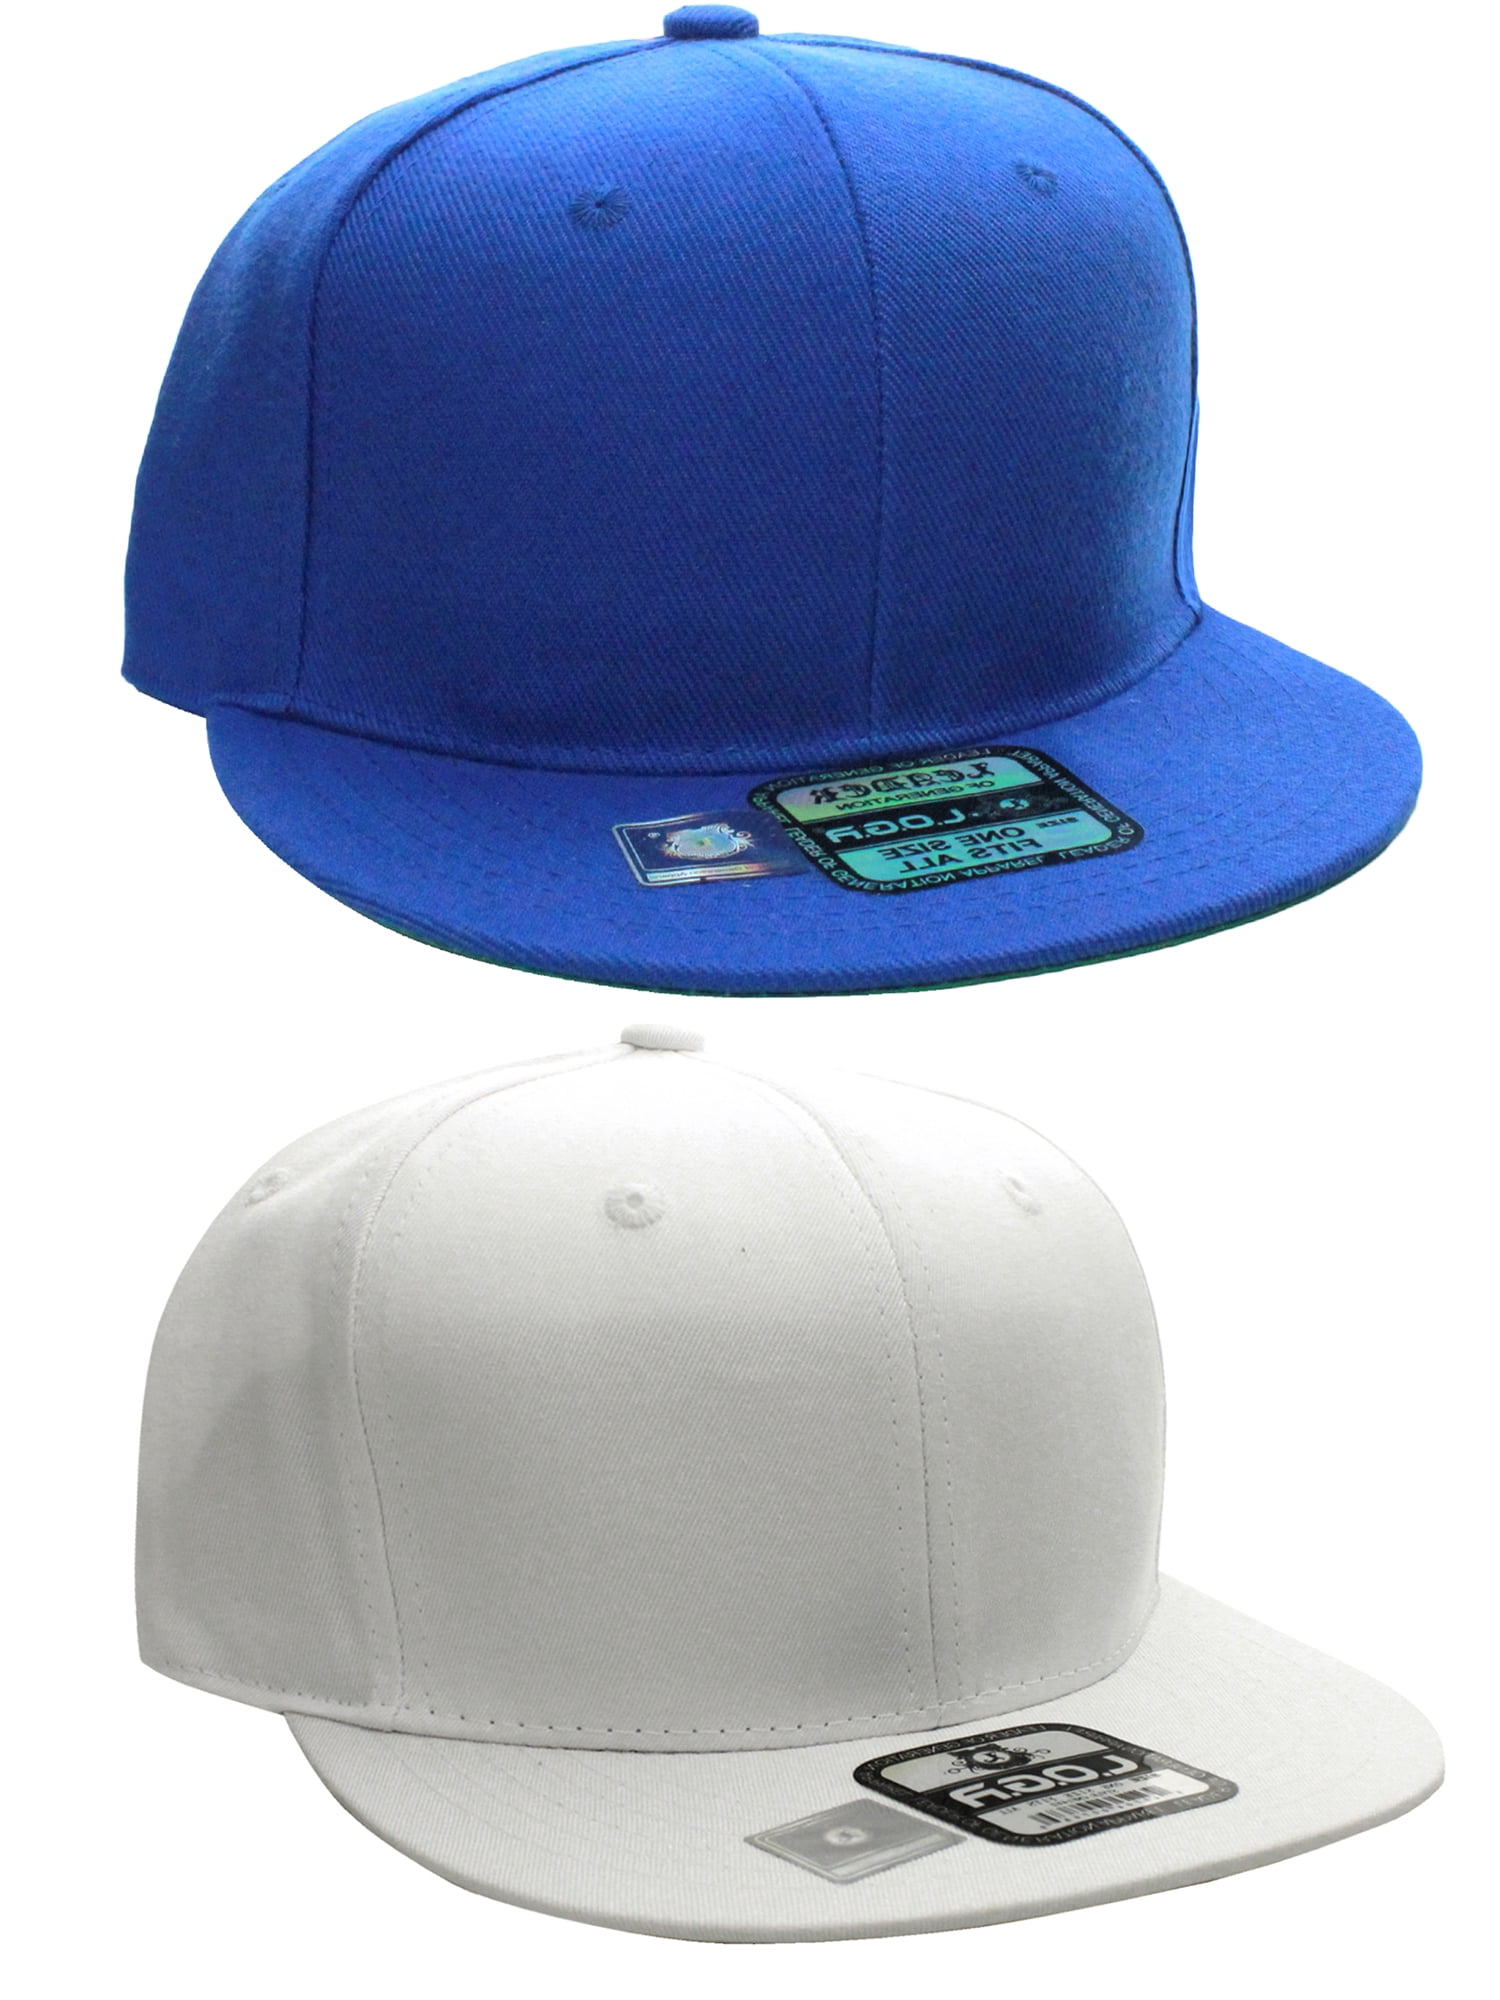 Smoke Dear Casquette Snapback Hat Adjustable Solid Flat Bill Baseball Caps Mens Black